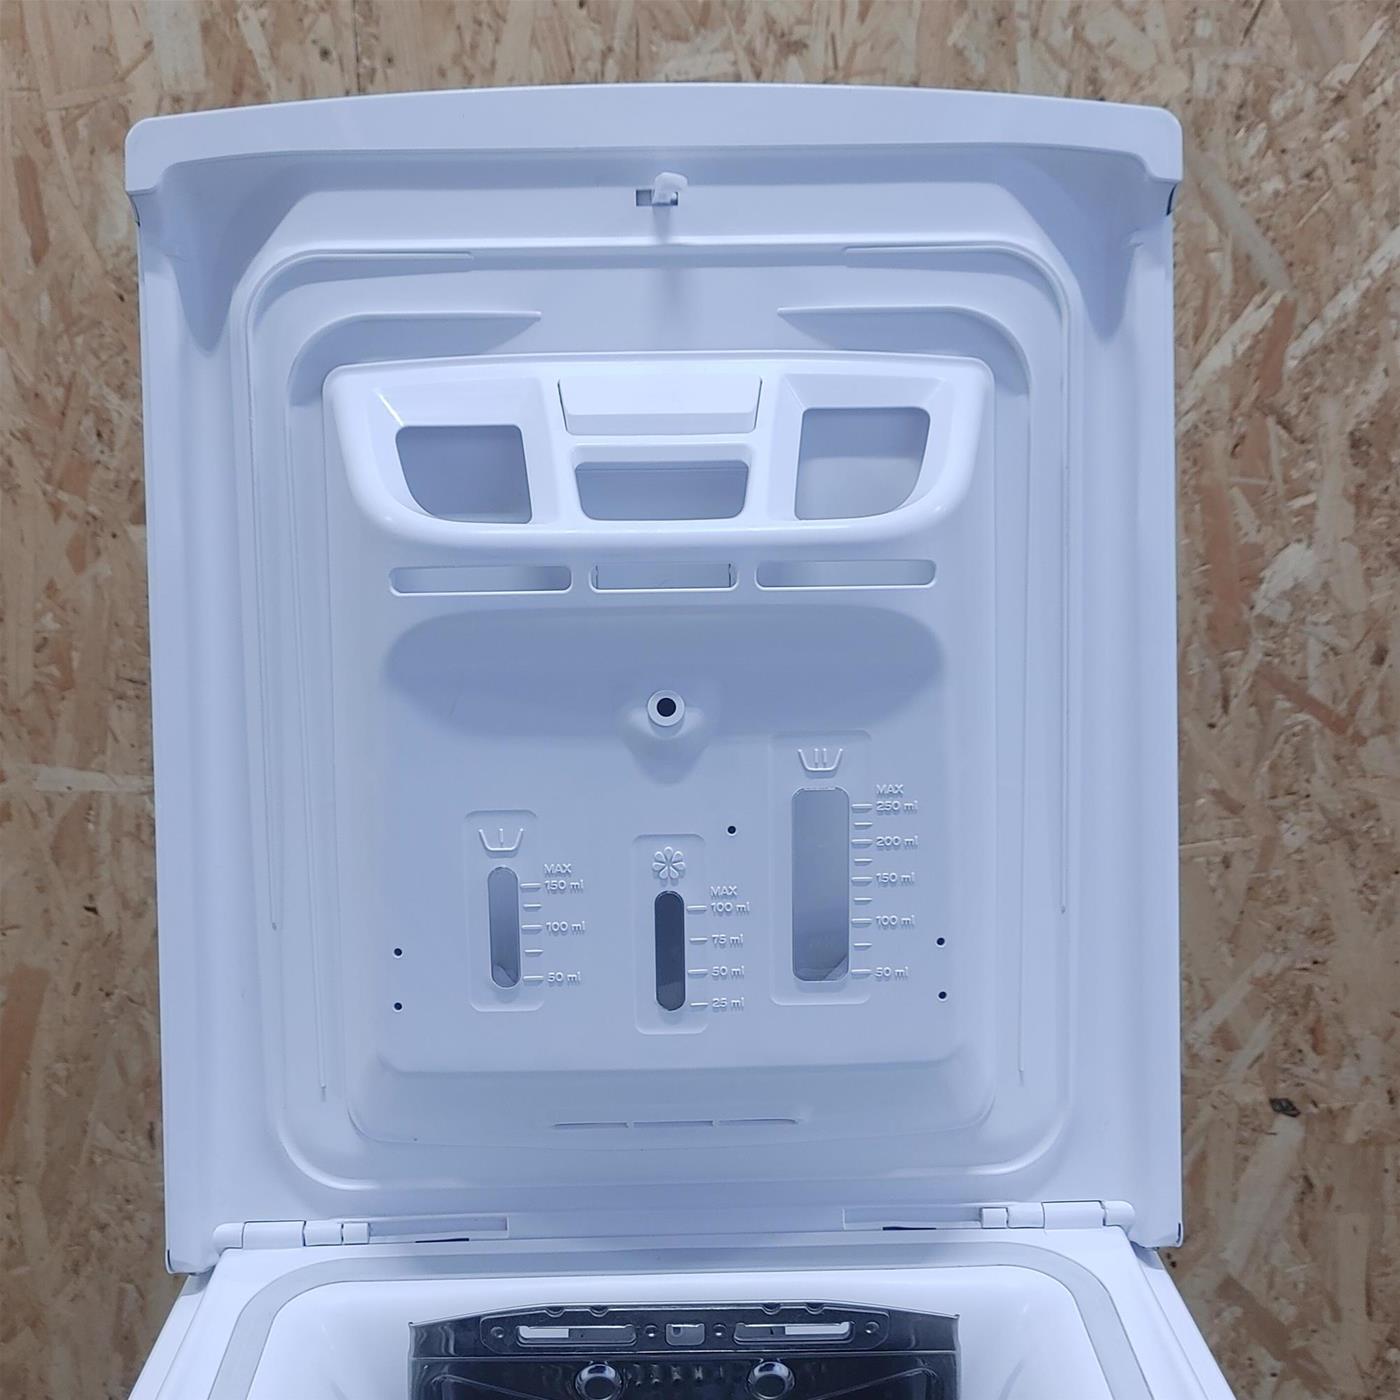 Hotpoint WMTG 722B IT/N lavatrice Caricamento dall'alto 7 kg 1200 Giri/min Bianco